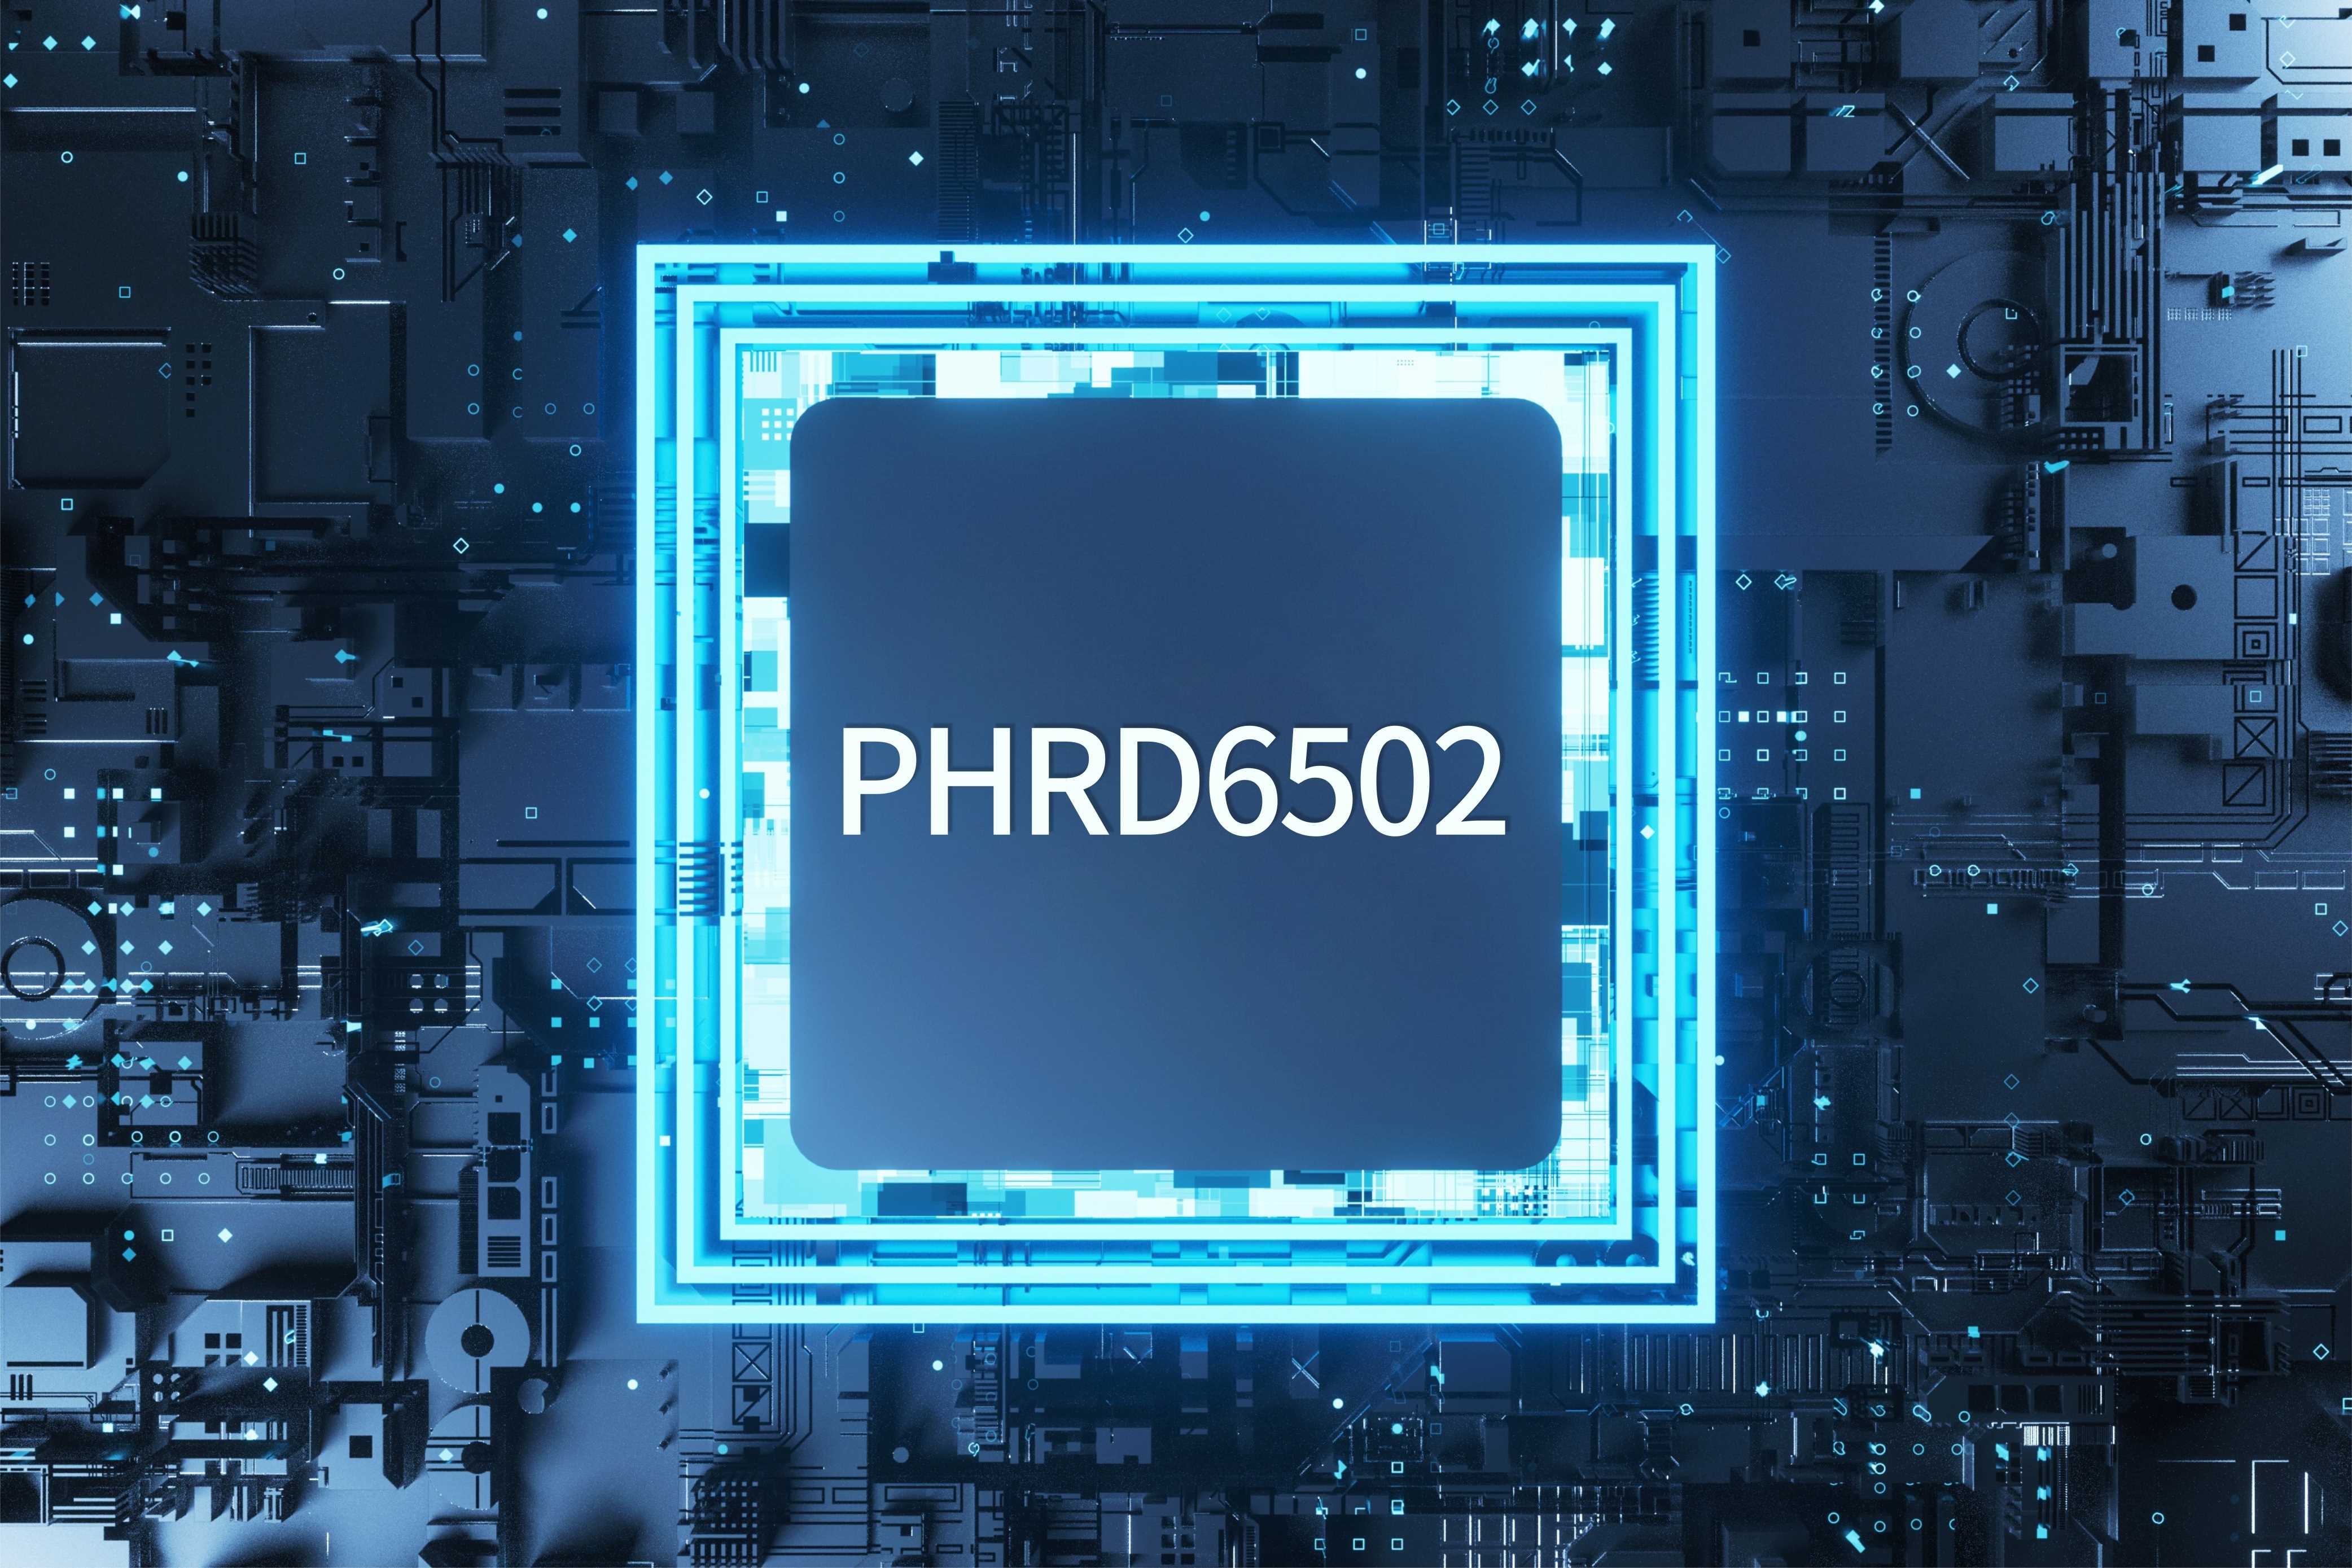 PHRD6502